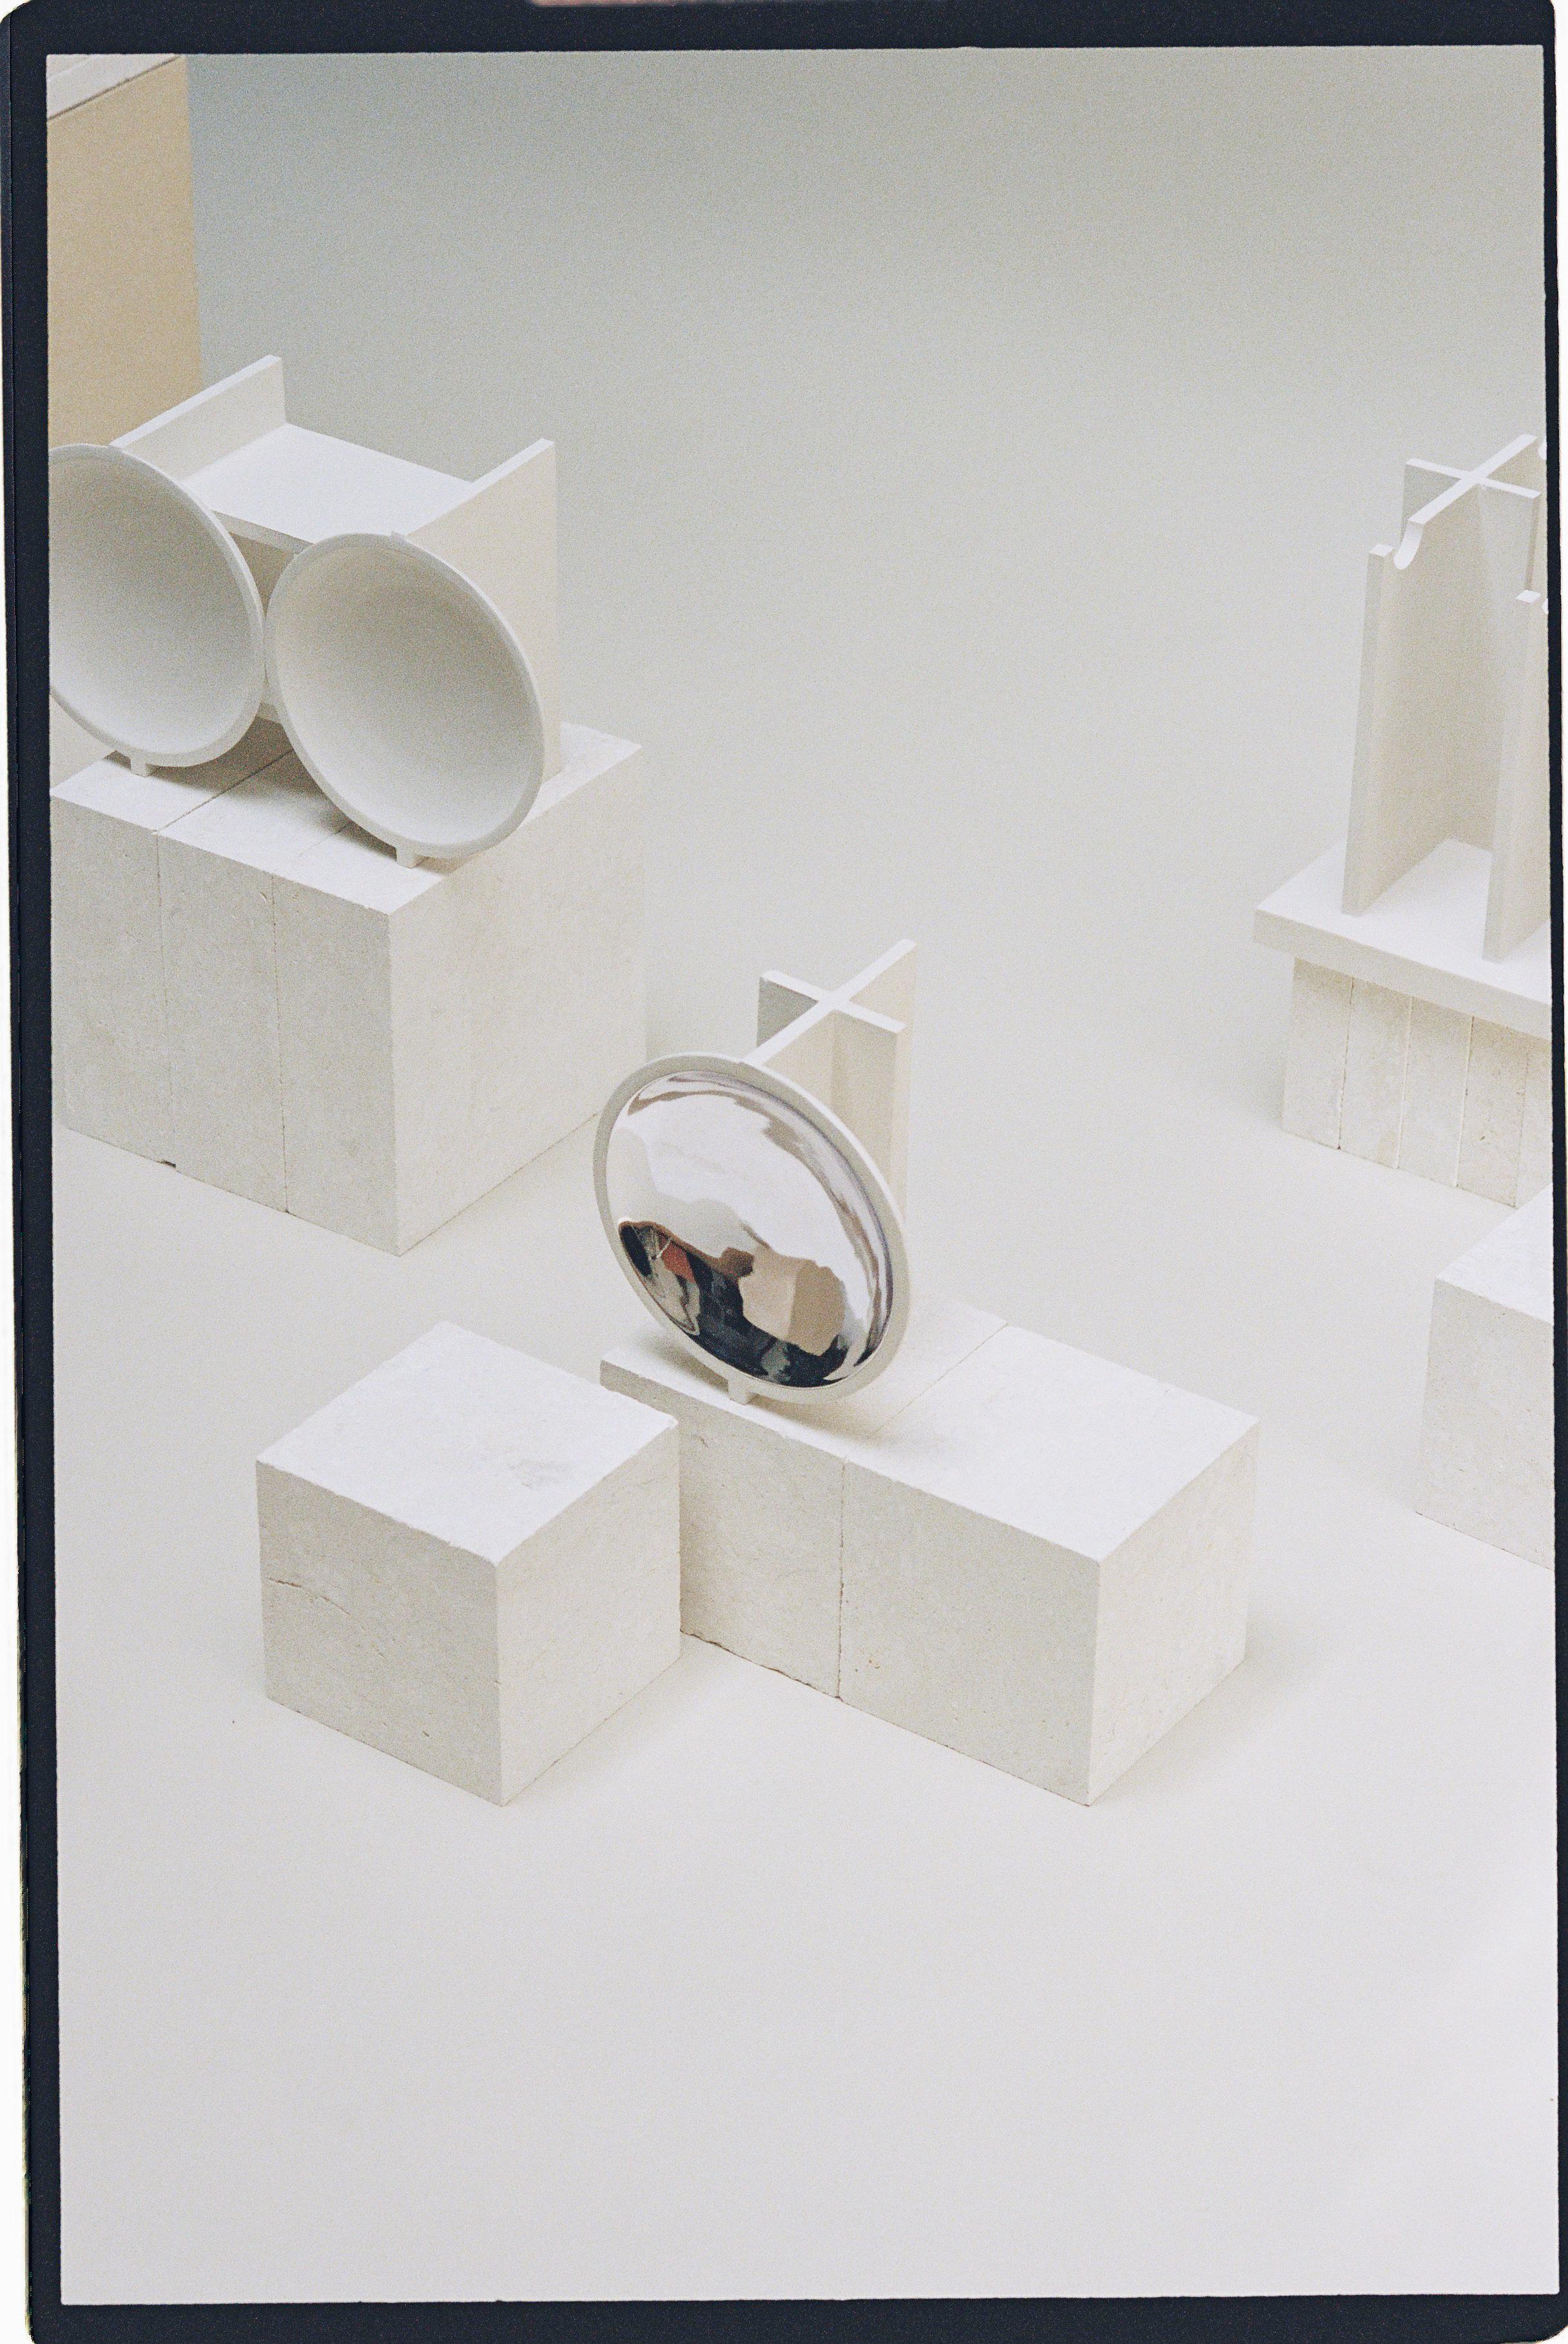 Set of 2 Arecibo Objects Cosmos Awarness Program by Turbina For Sale 1